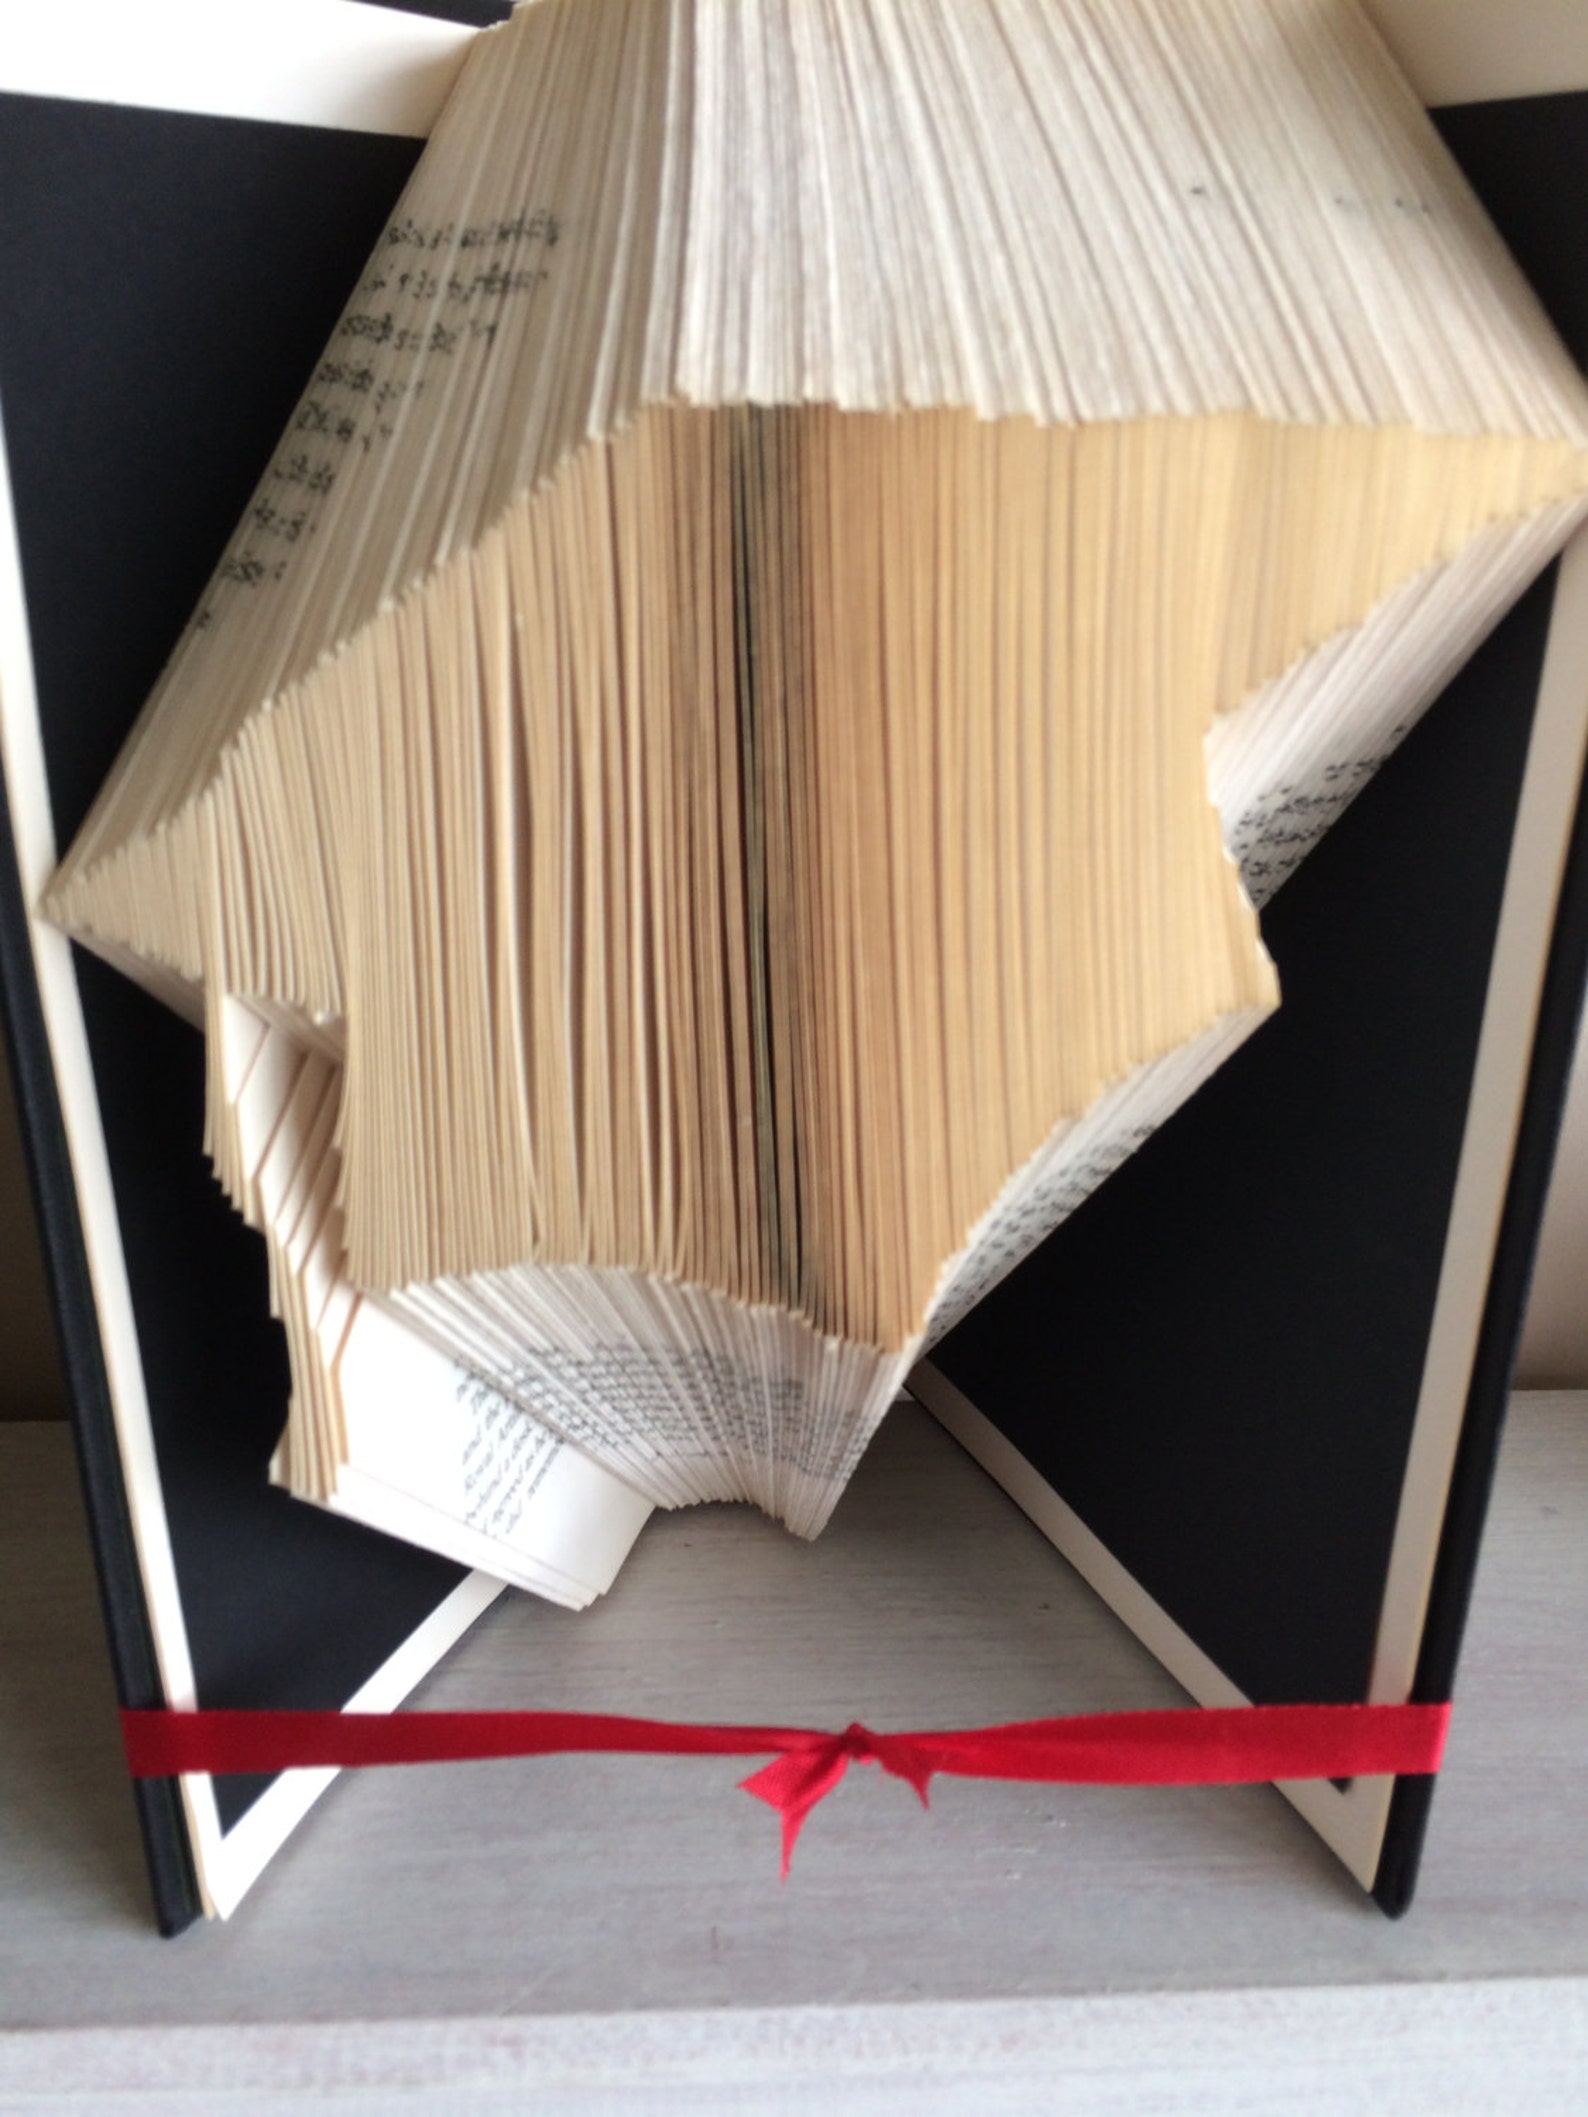 graduation-cap-book-folding-pattern-congratulations-gift-etsy-uk